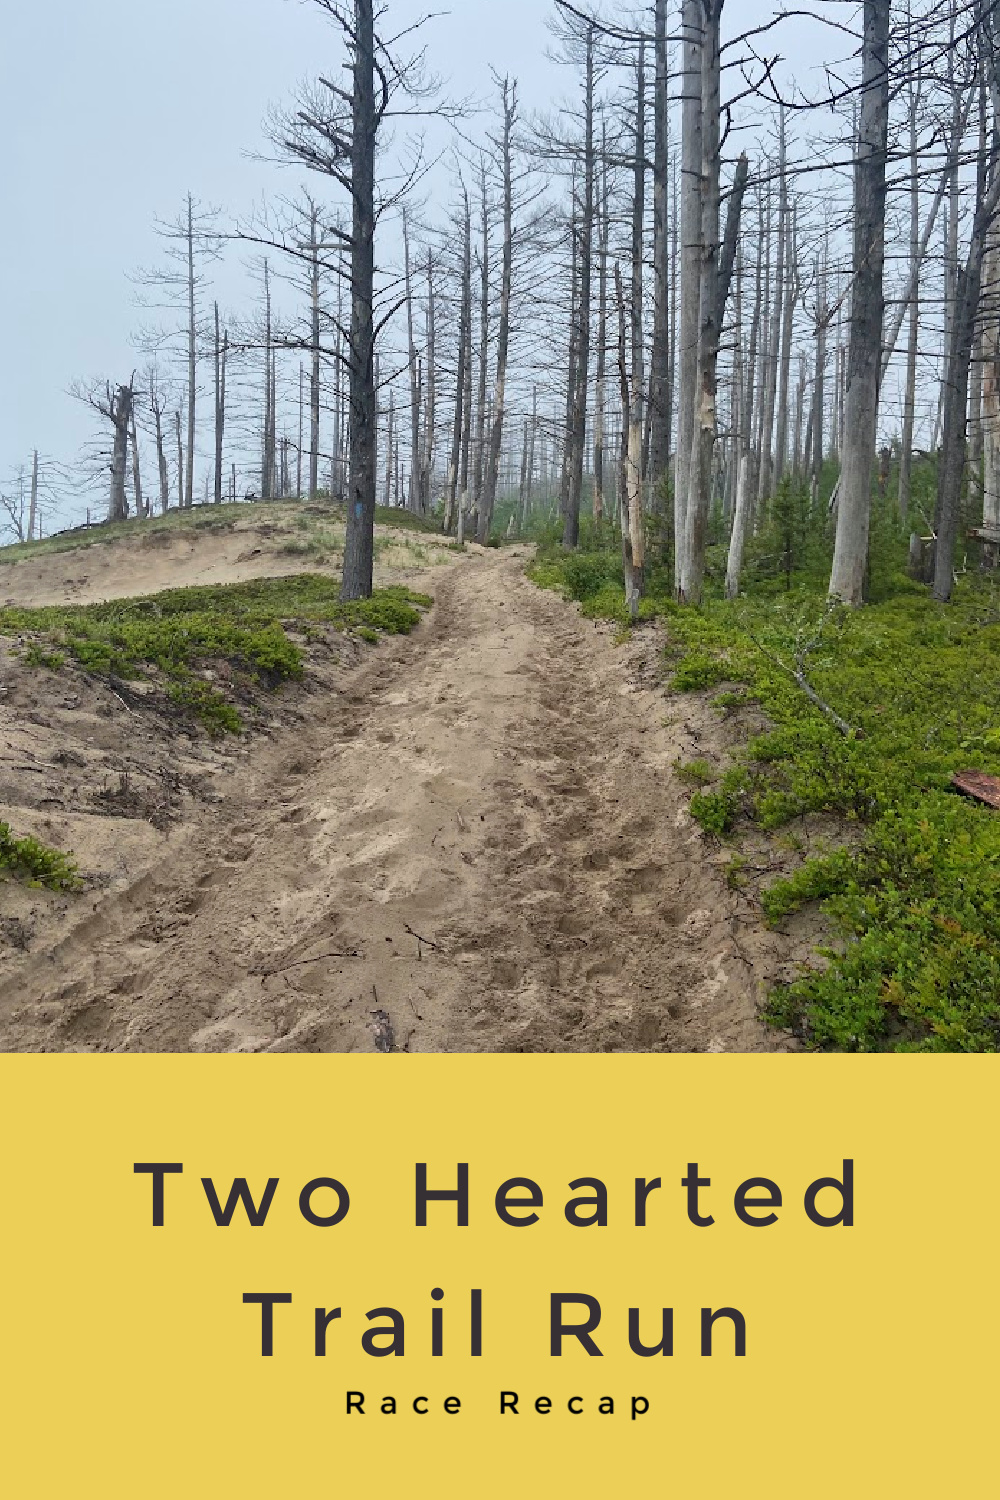 Two Hearted Trail Run 50k - Race Recap